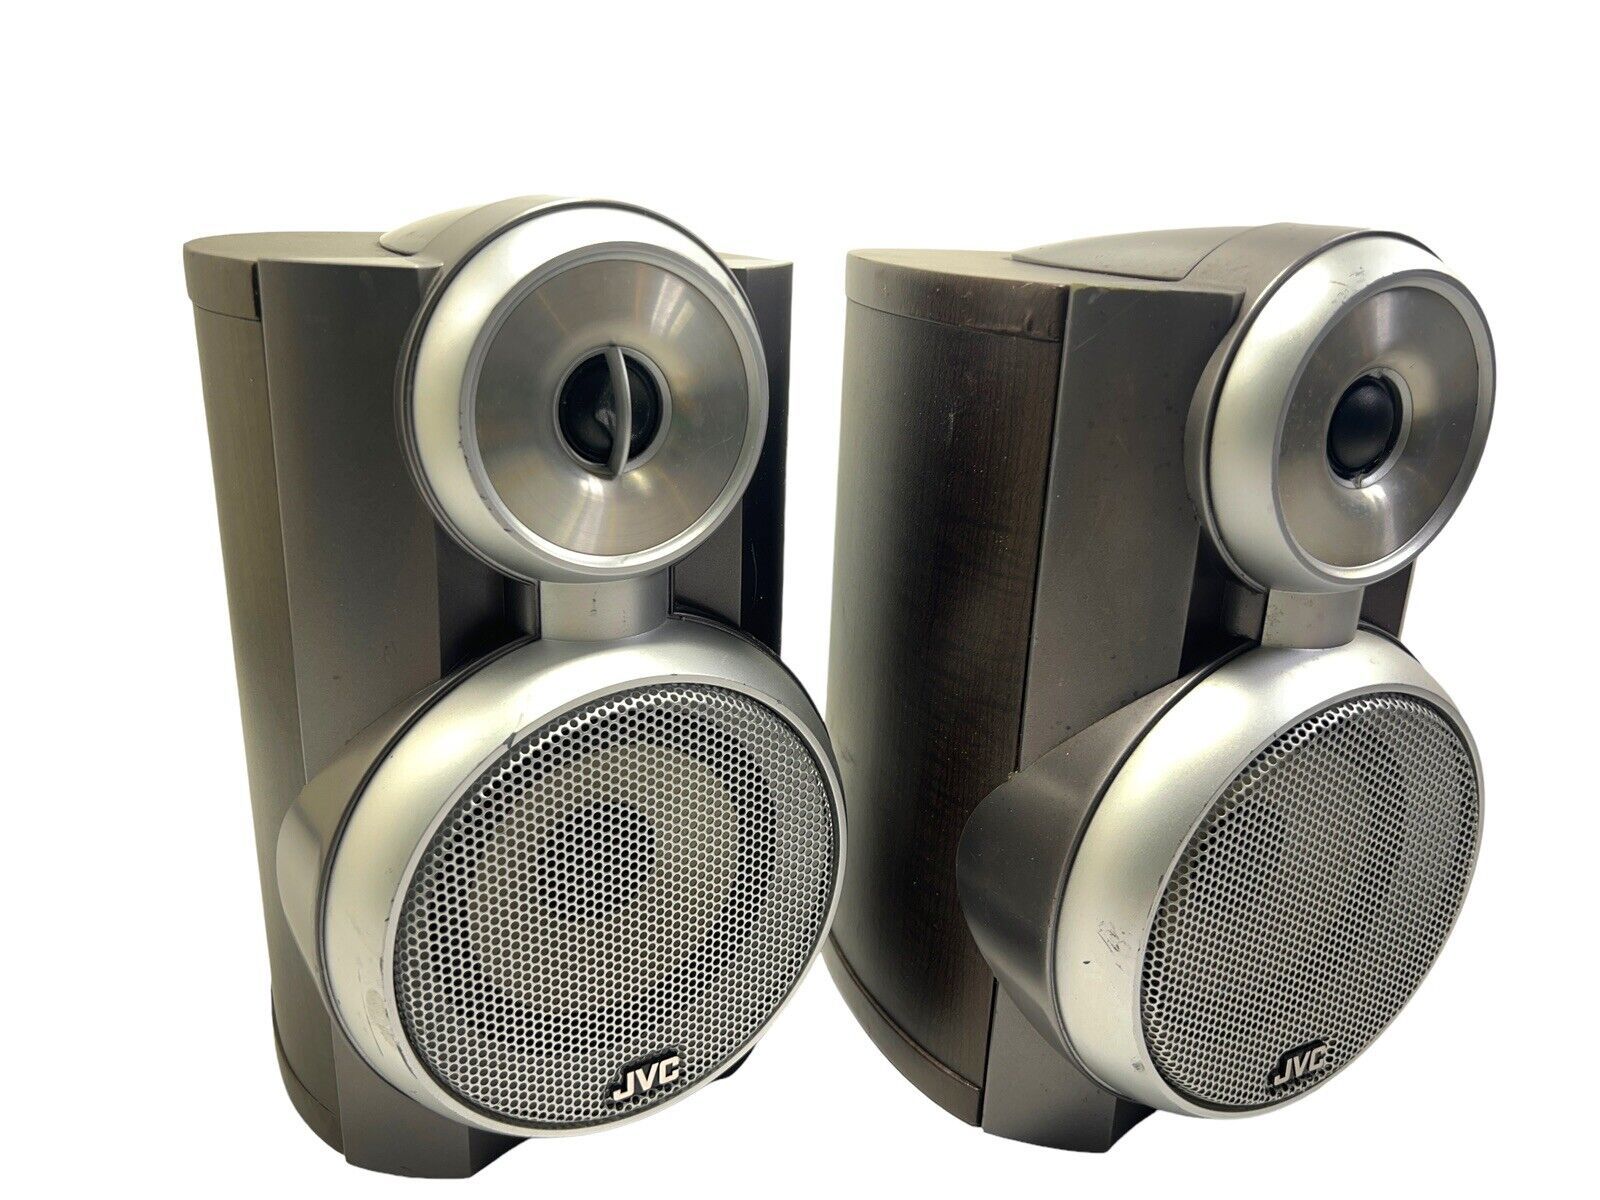 JVC Executive Desktop Speakers  FS-X3 - Tested - $98.99